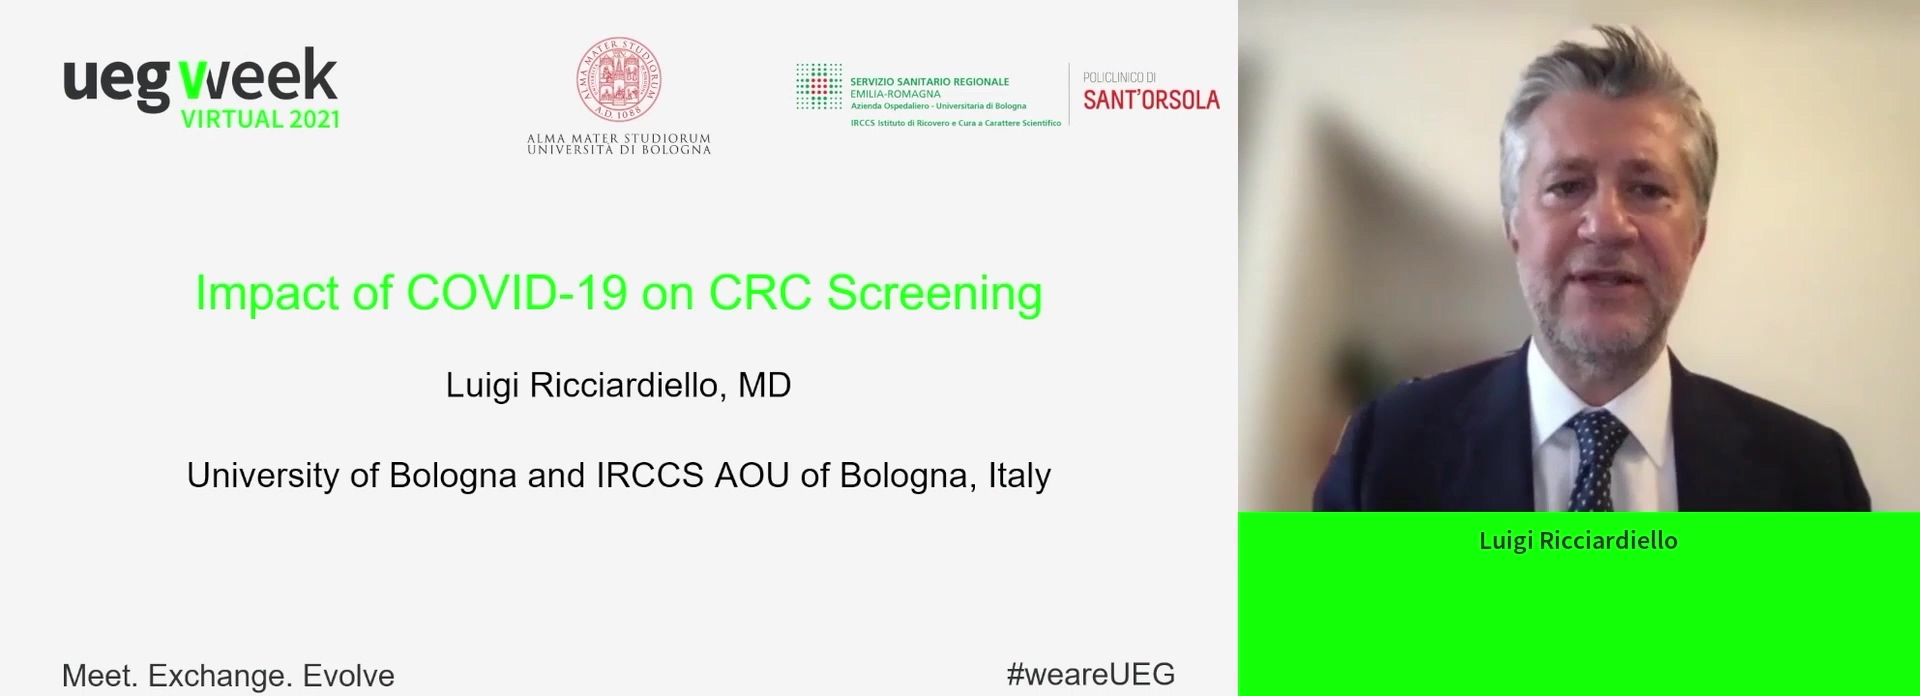 Impact of COVID-19 on CRC screening